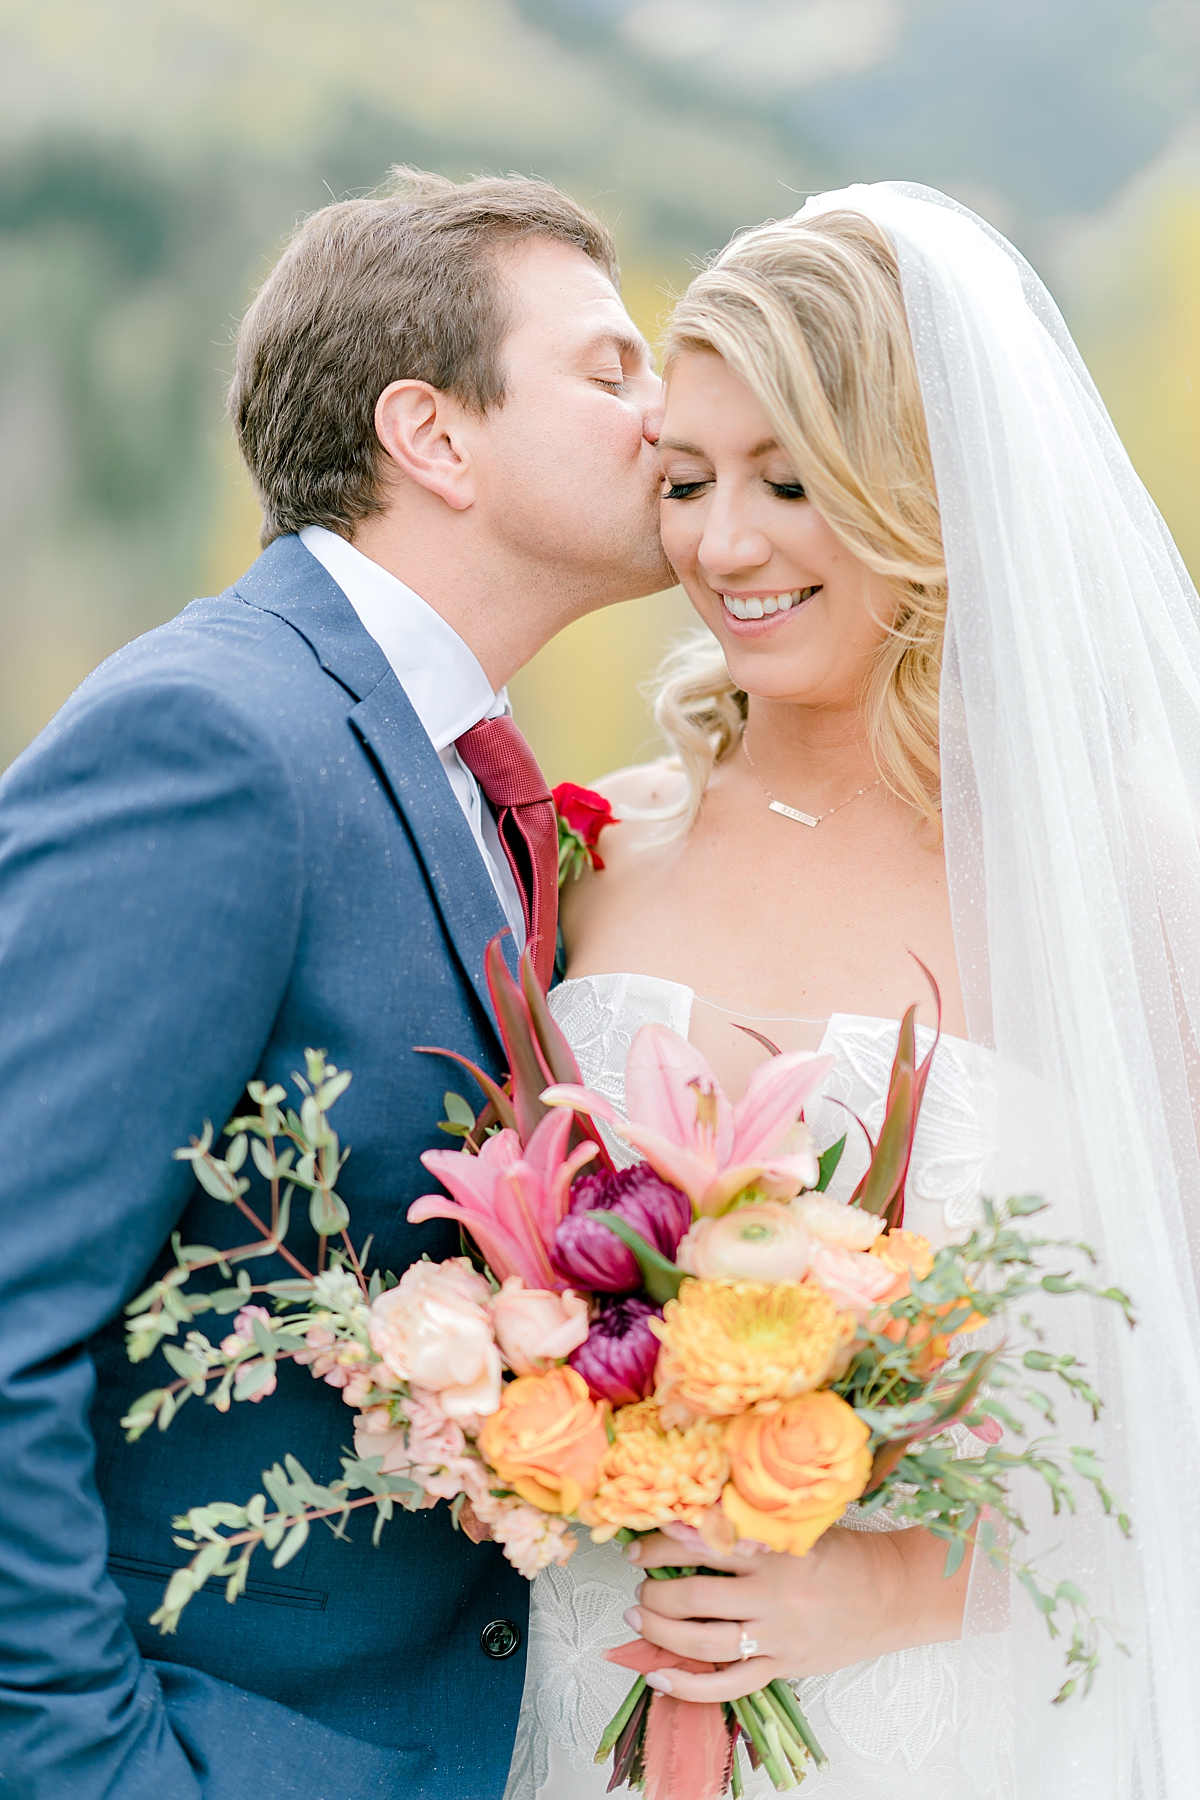 A groom sweetly kisses his bride's cheek at their Aspen Colorado fall wedding.